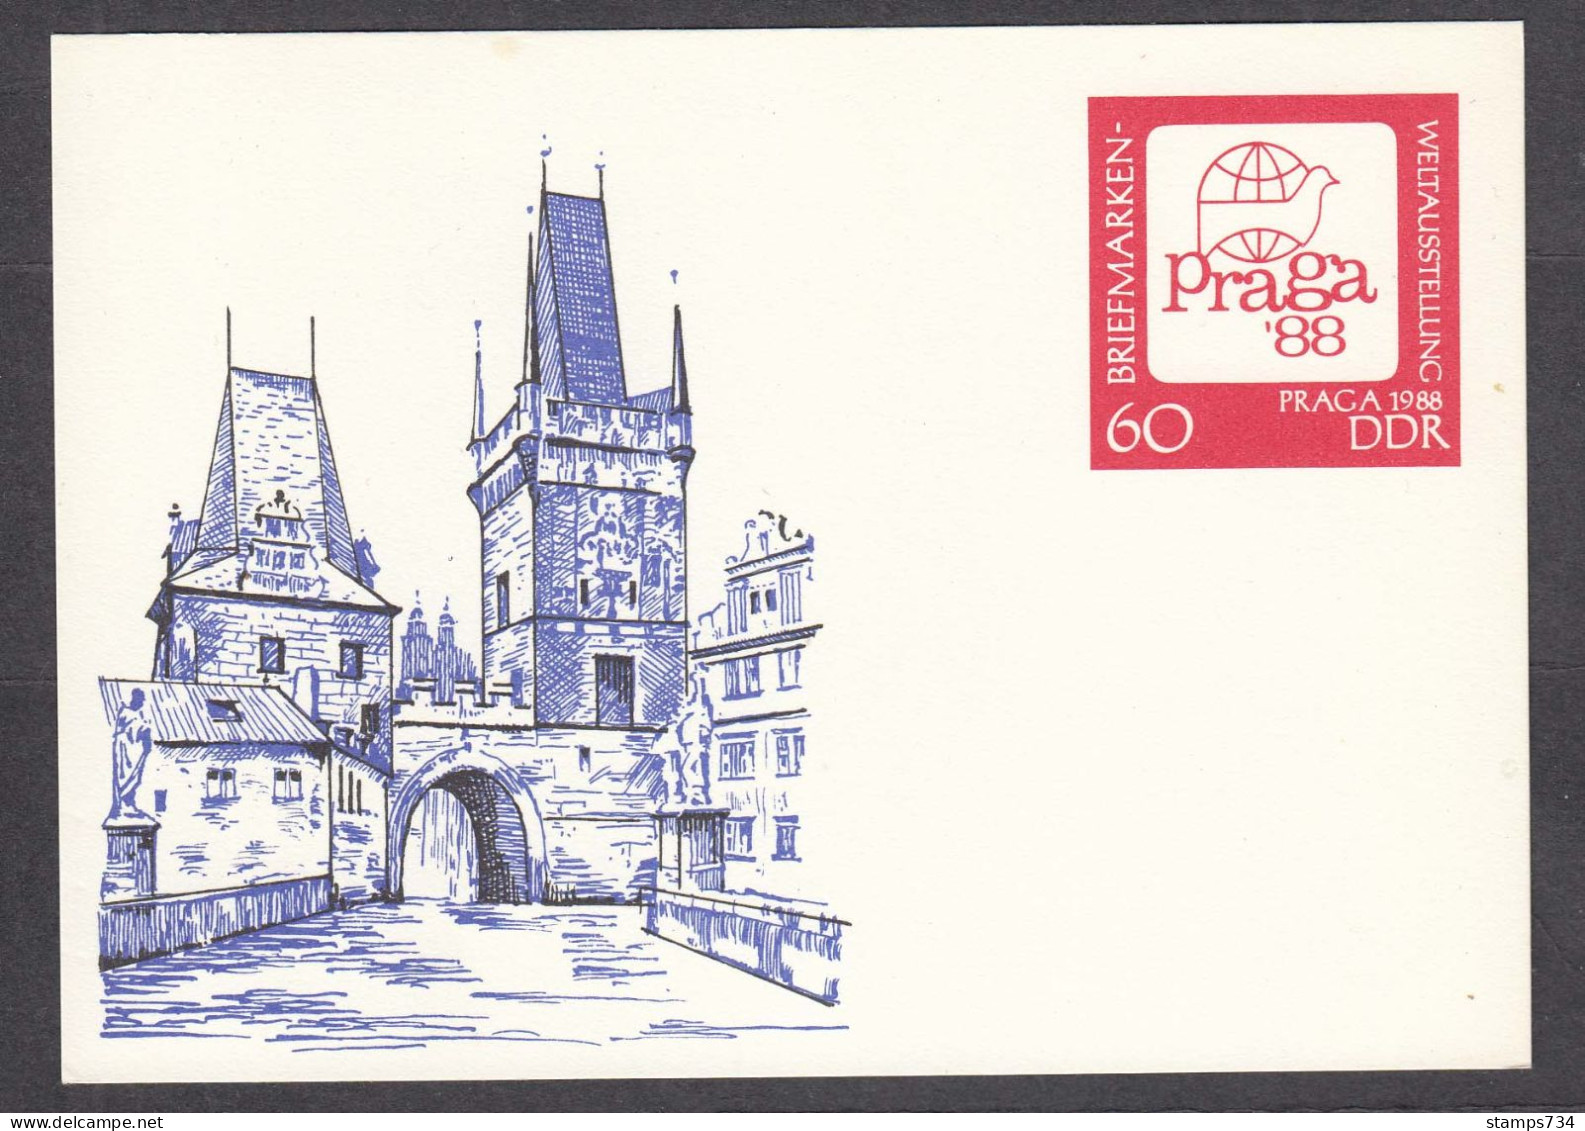 DDR 02/1988 - World Stamp Exhibion PRAGA'88, Post. Stationery (card), Mint - Postcards - Mint